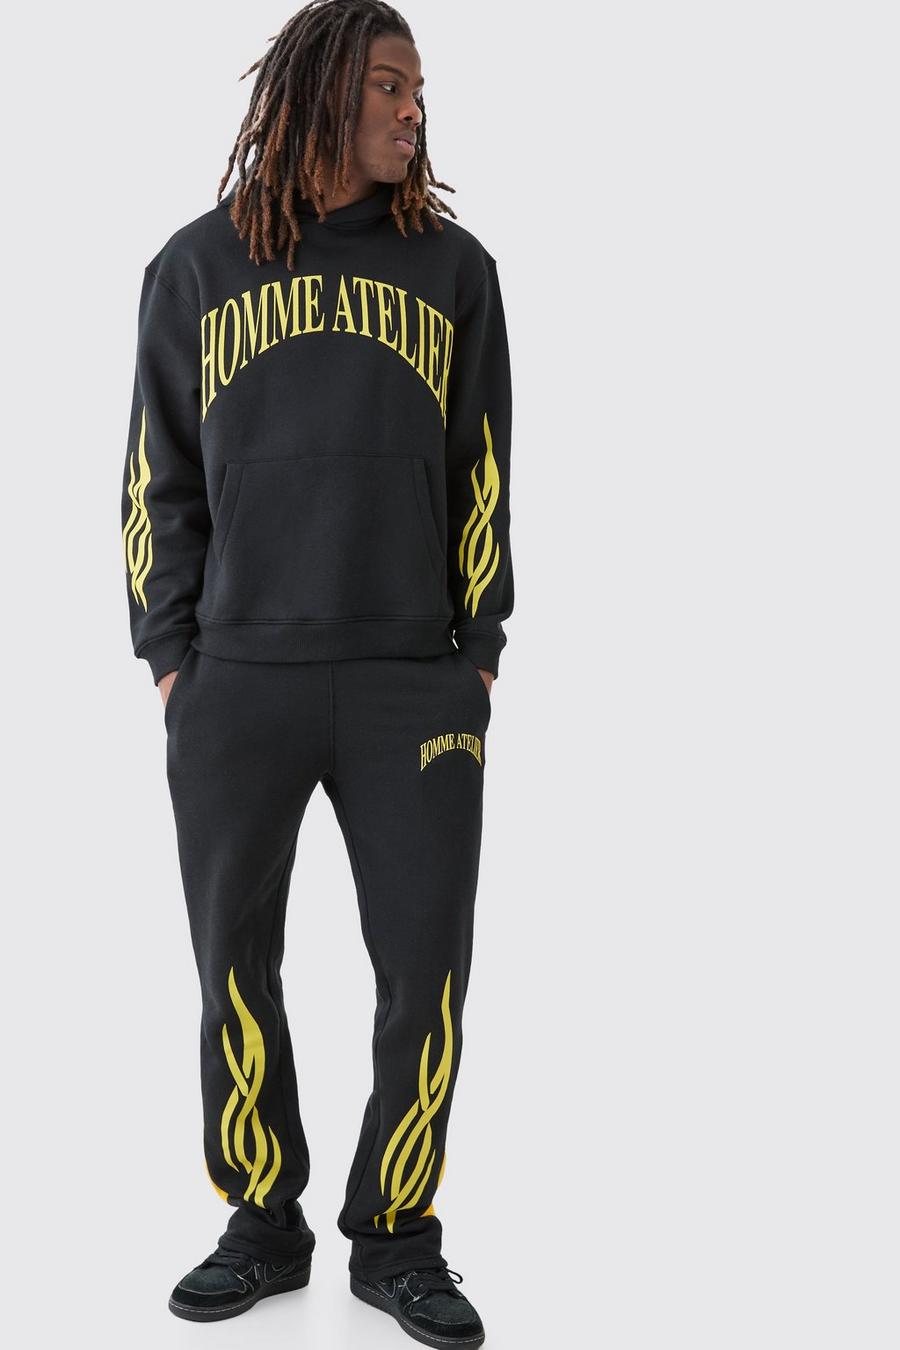 Oversize Trainingsanzug mit Homme Bm Print und Kapuze, Black